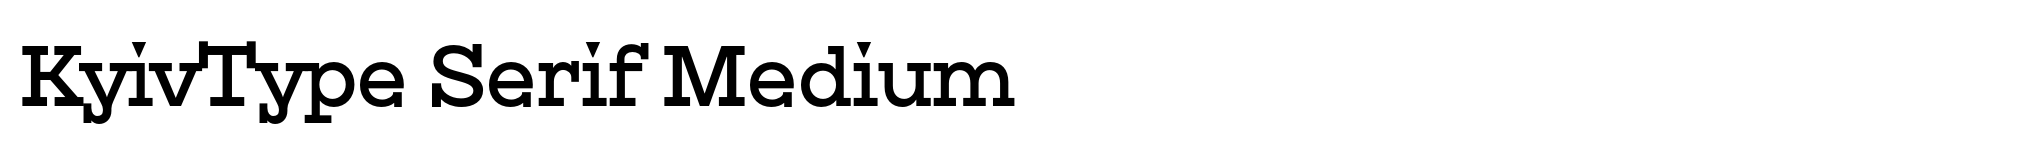 KyivType Serif Medium image